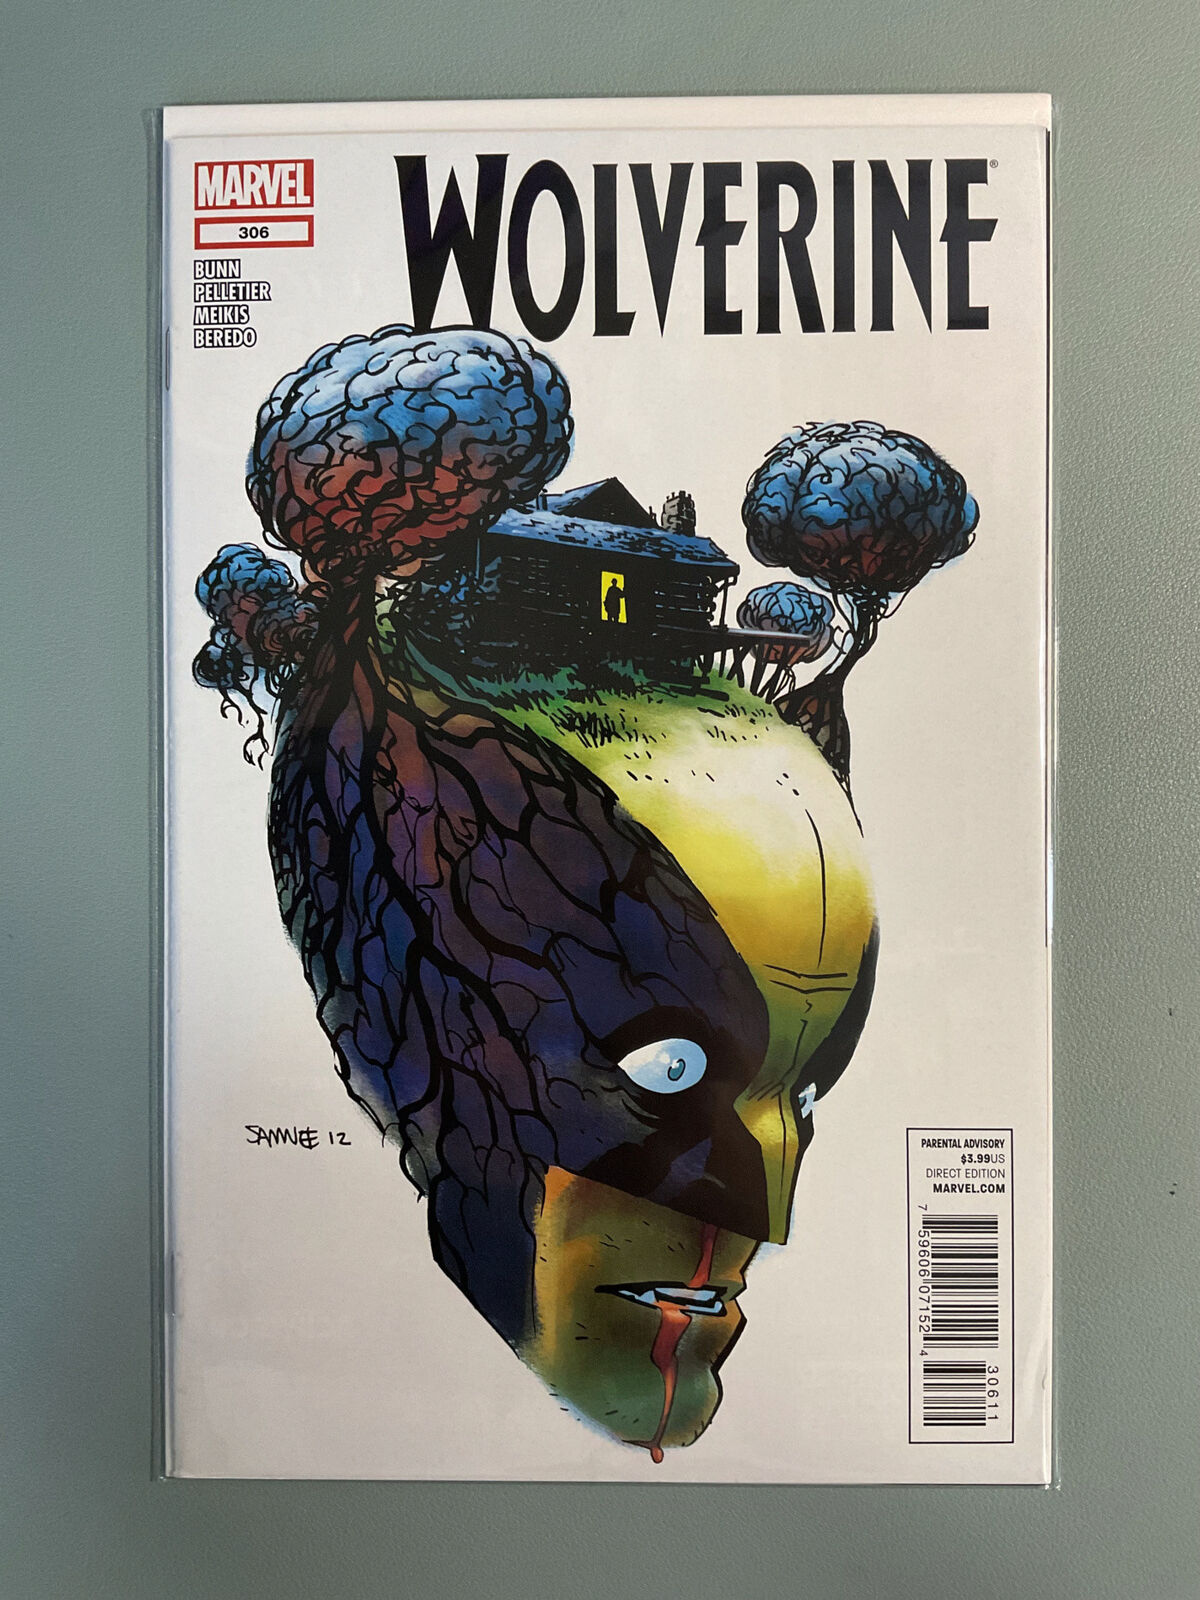 Wolverine(vol. 3) #306 - Marvel Comics - Combine Shipping